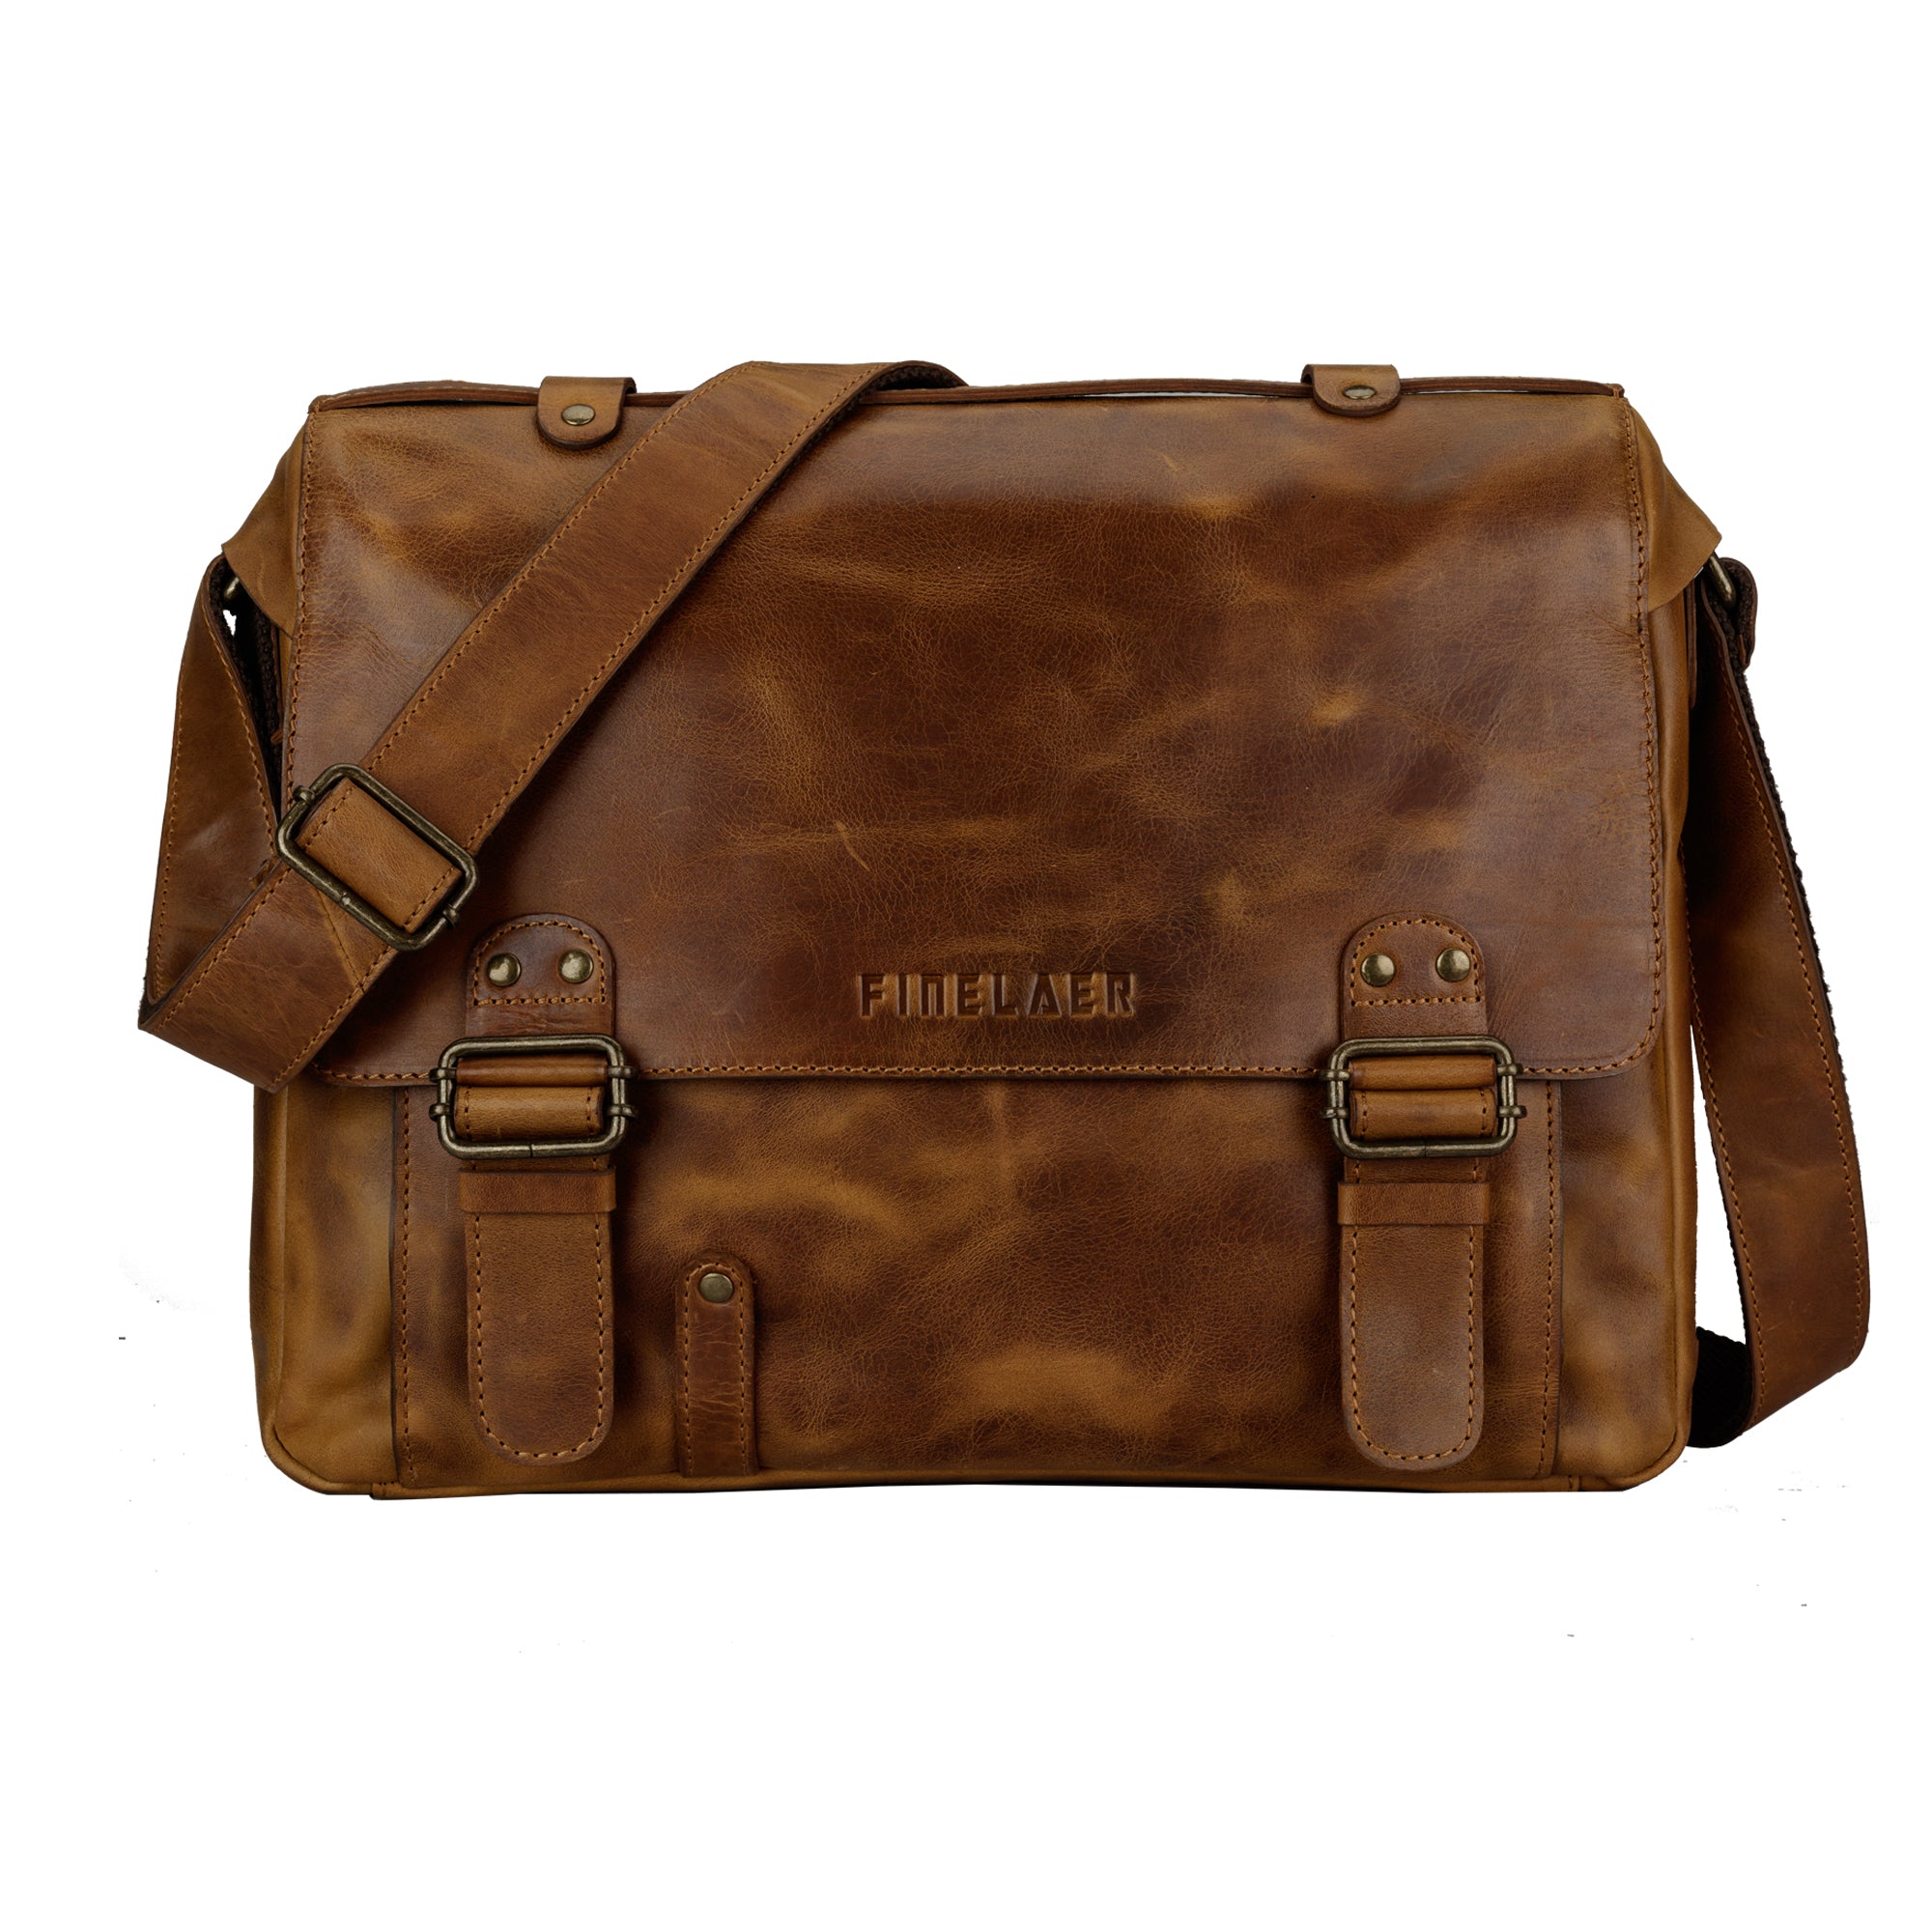 Finelaer Men's Leather Laptop Messenger Bags - Stylish & Durable